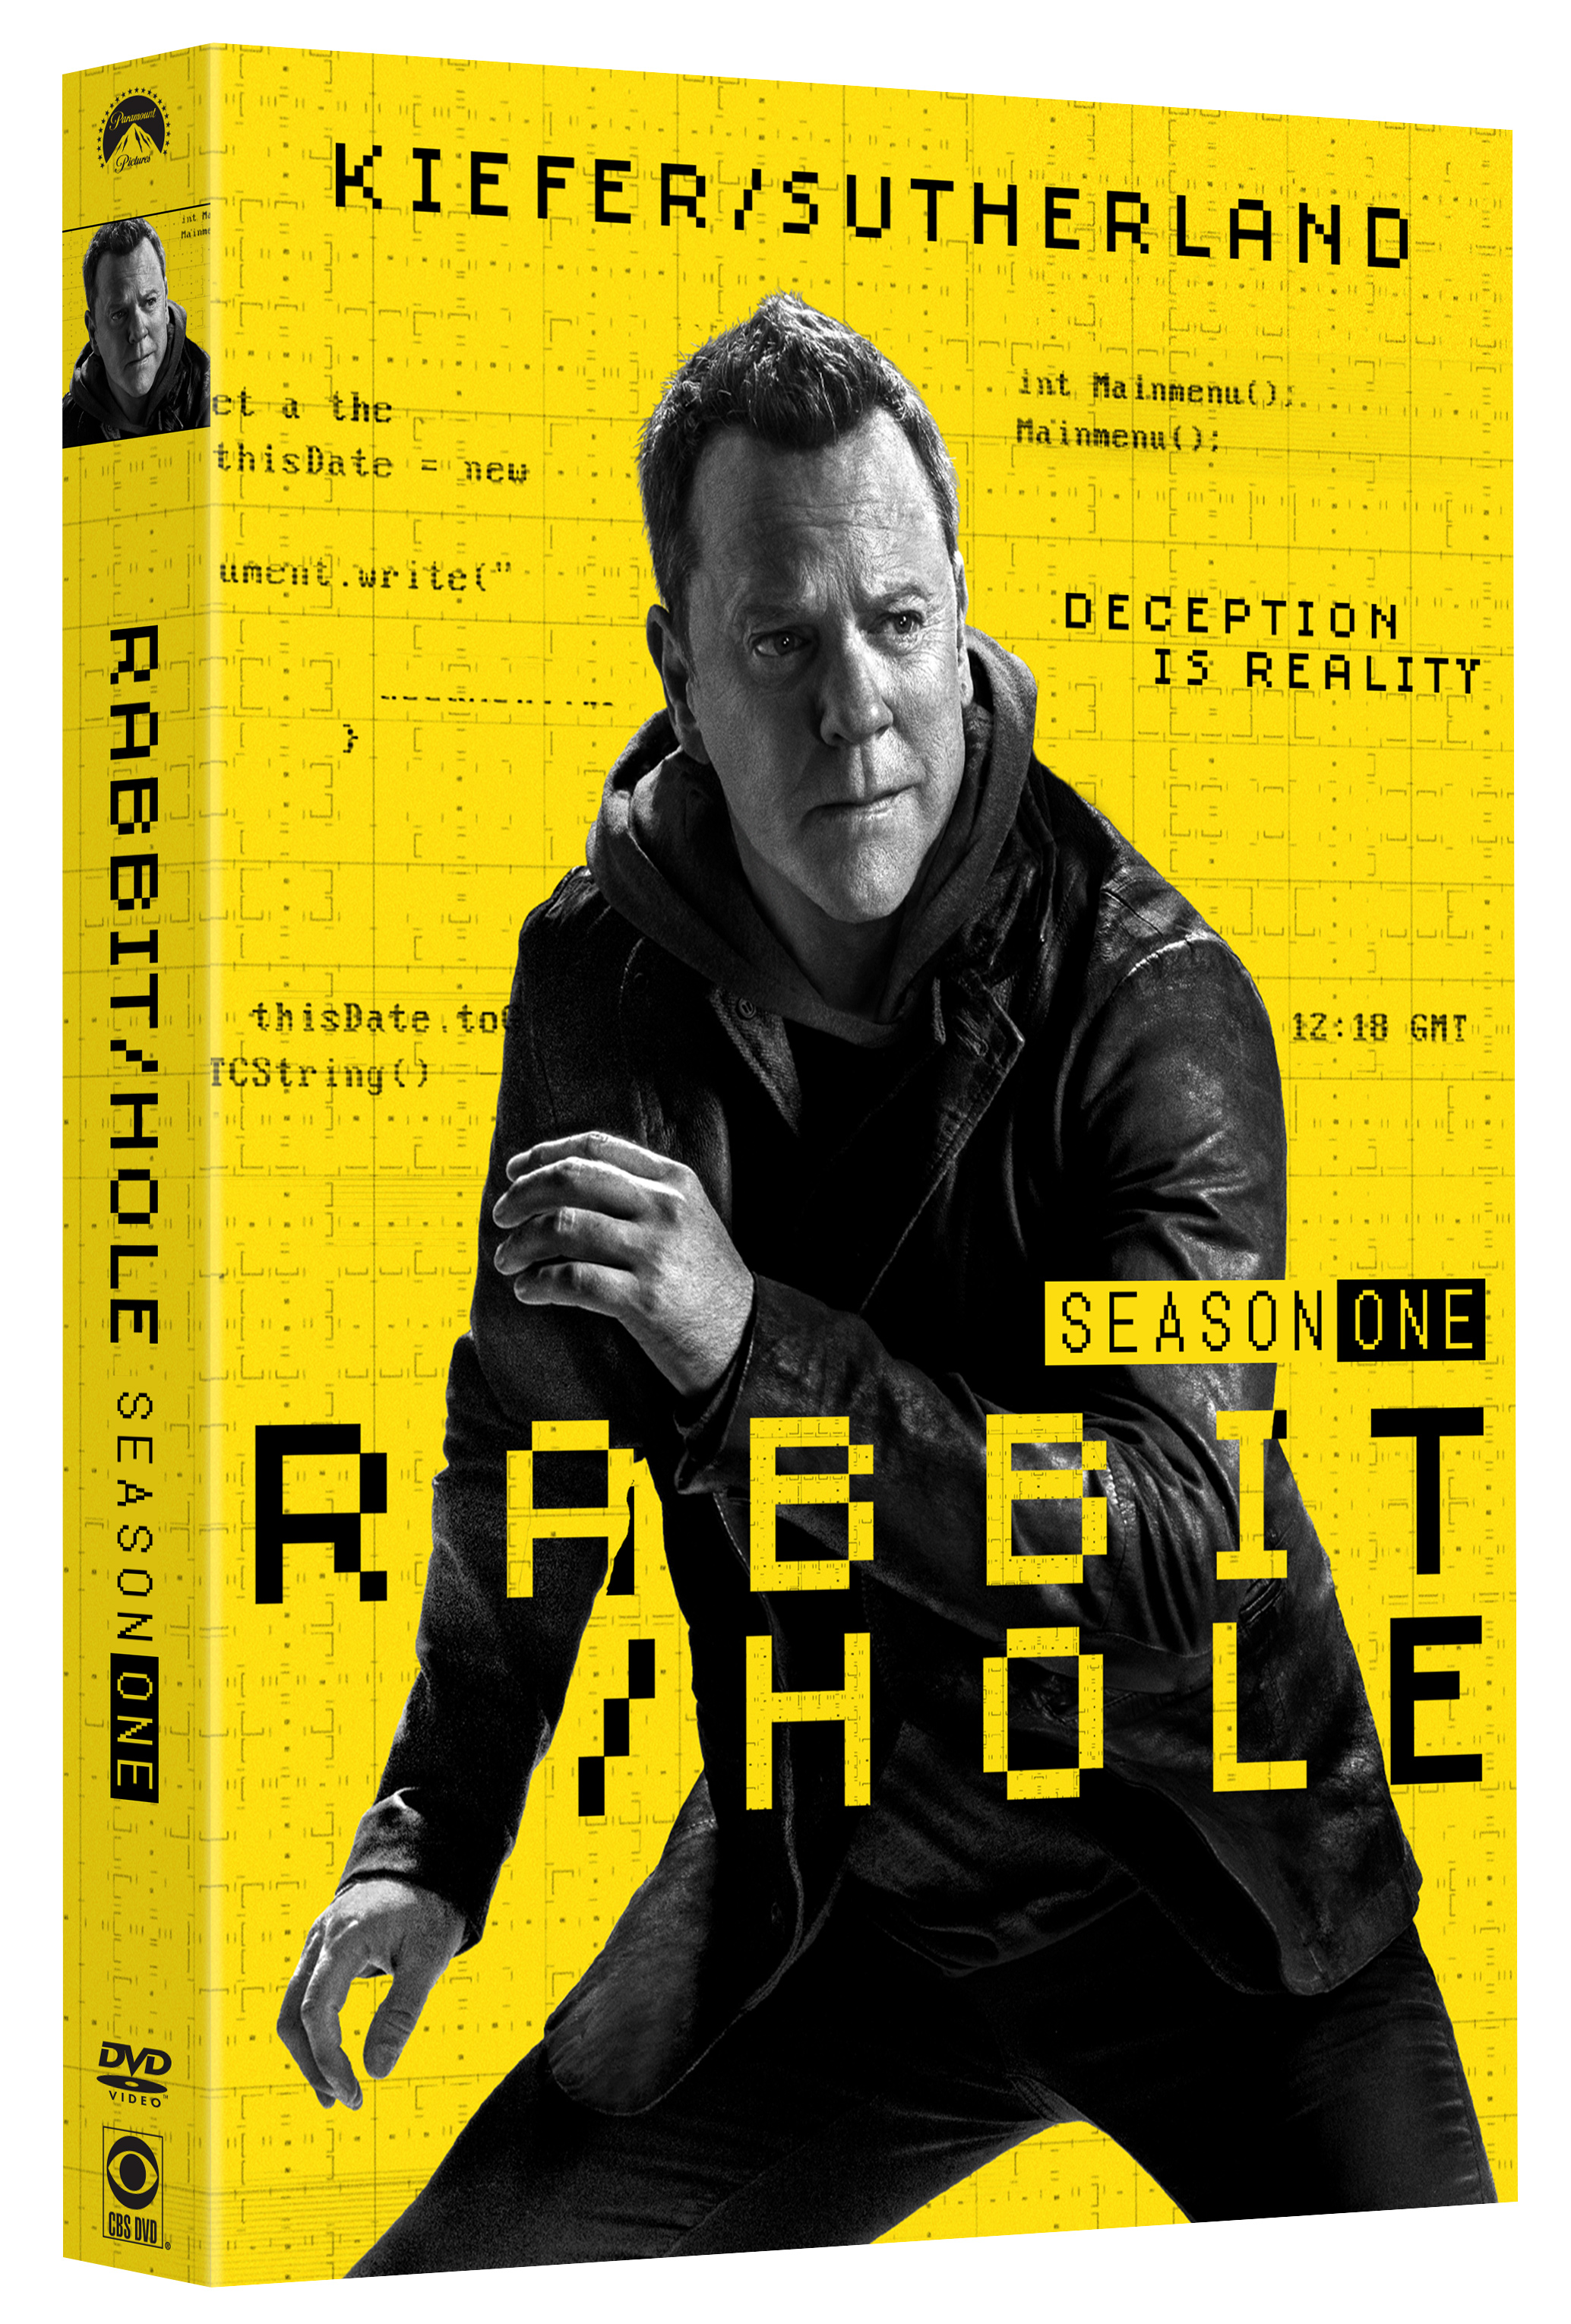 Rabbit Hole: Season One DVD cover (Paramount Home Entertainment)